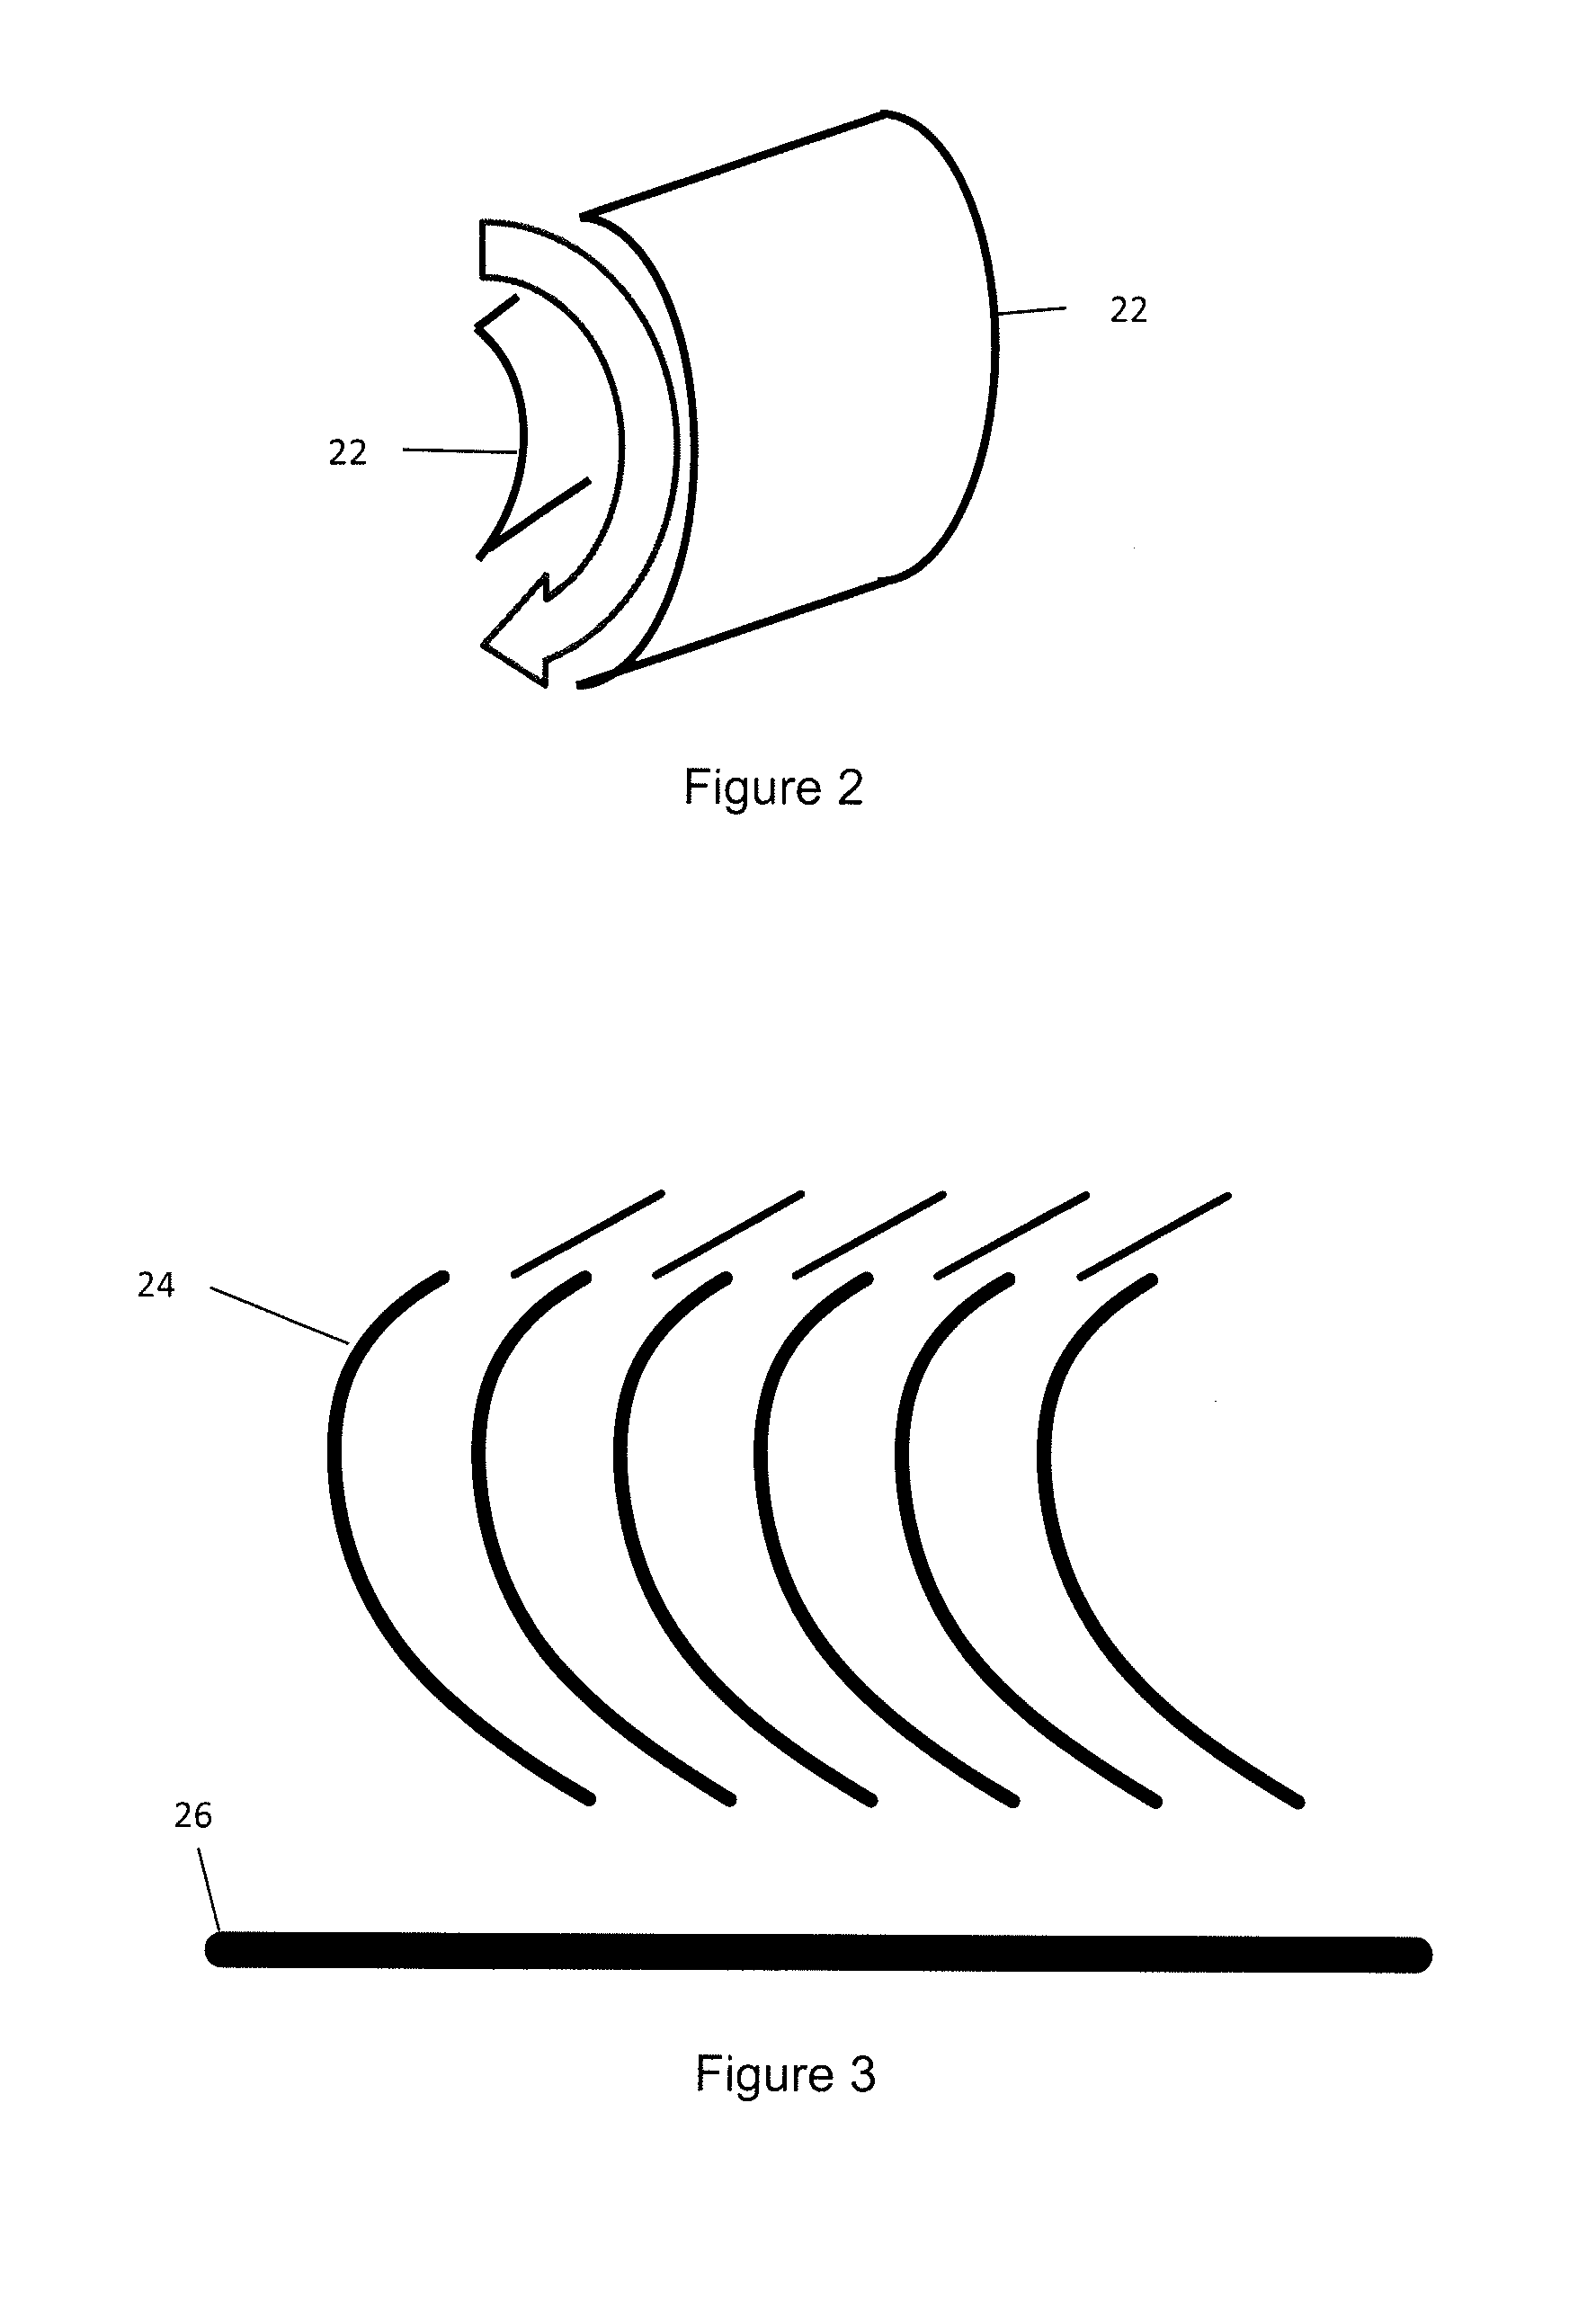 Reaction turbine and hybrid impulse reaction turbine